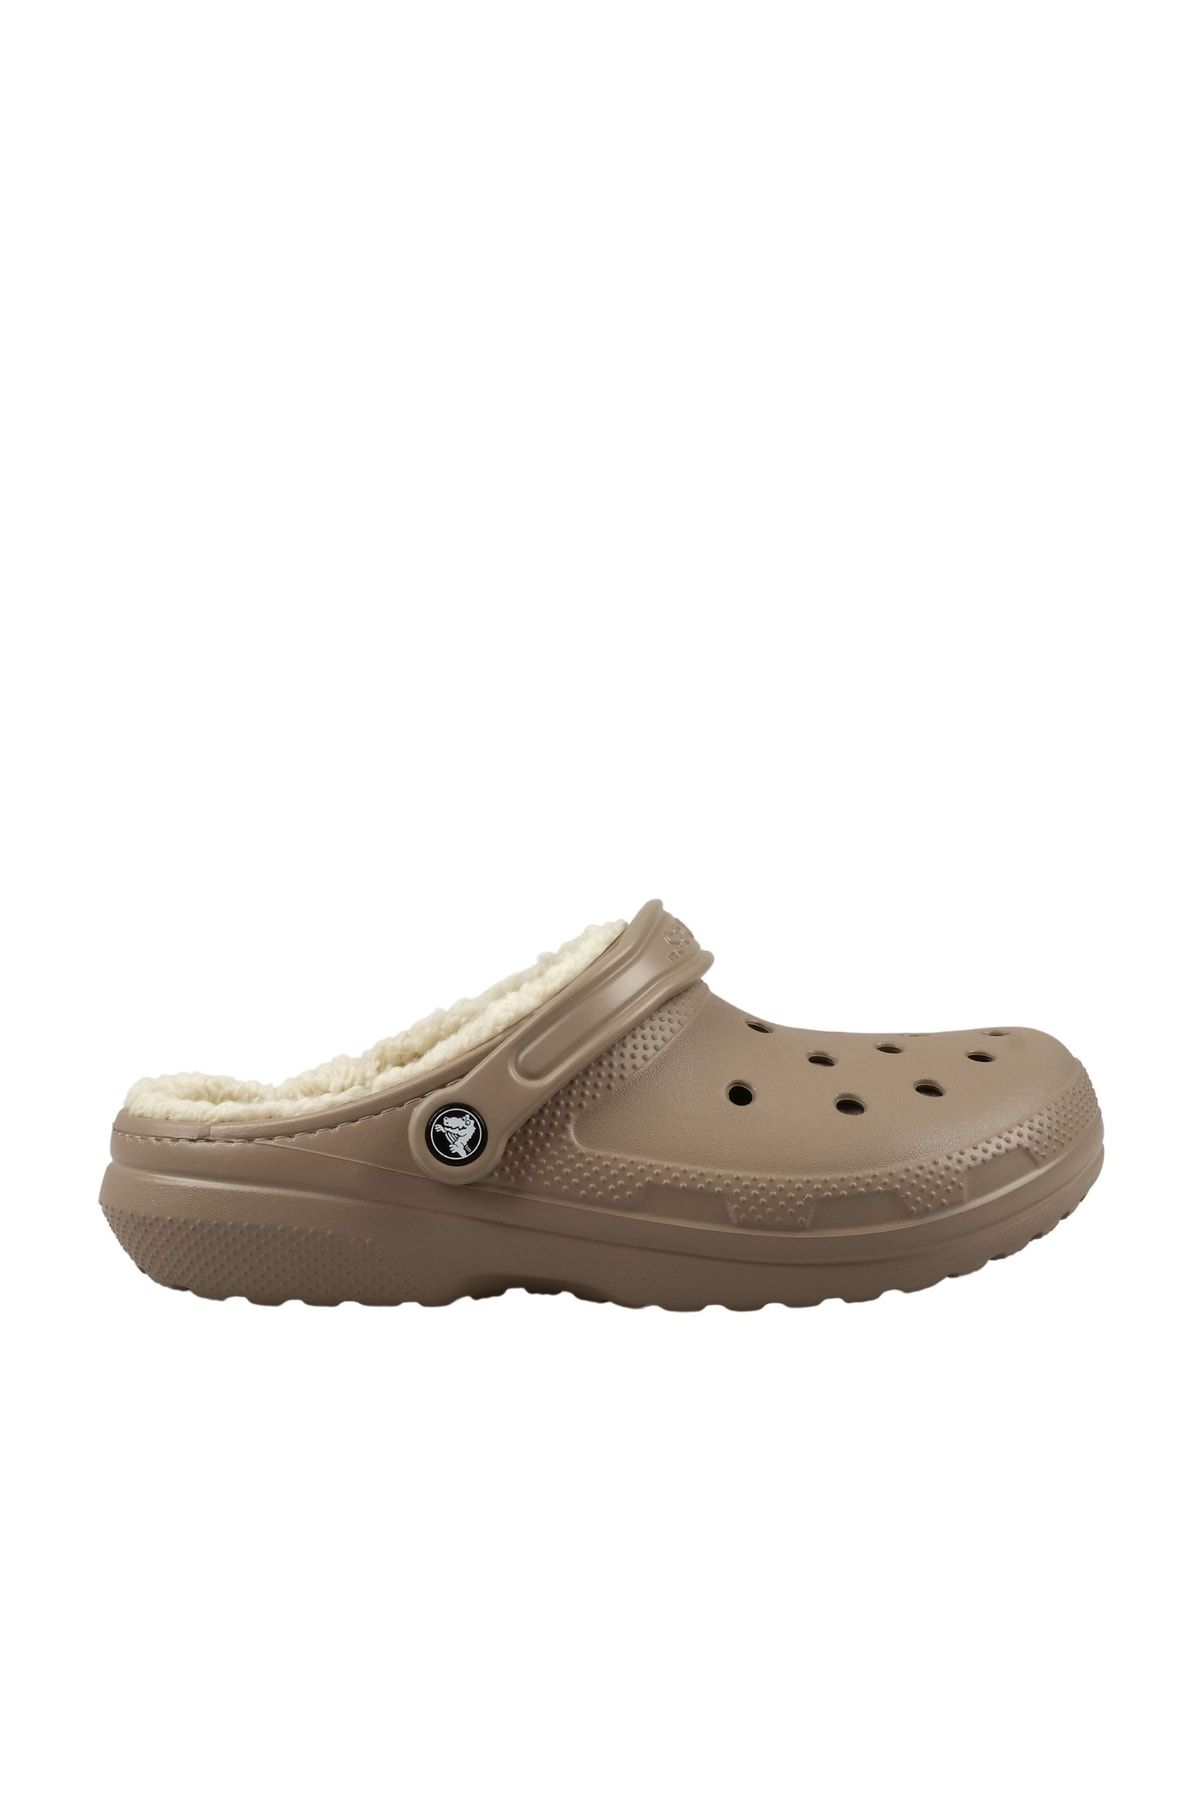 Crocs Classic Lined Kahverengi Sandalet (203591-2yb)